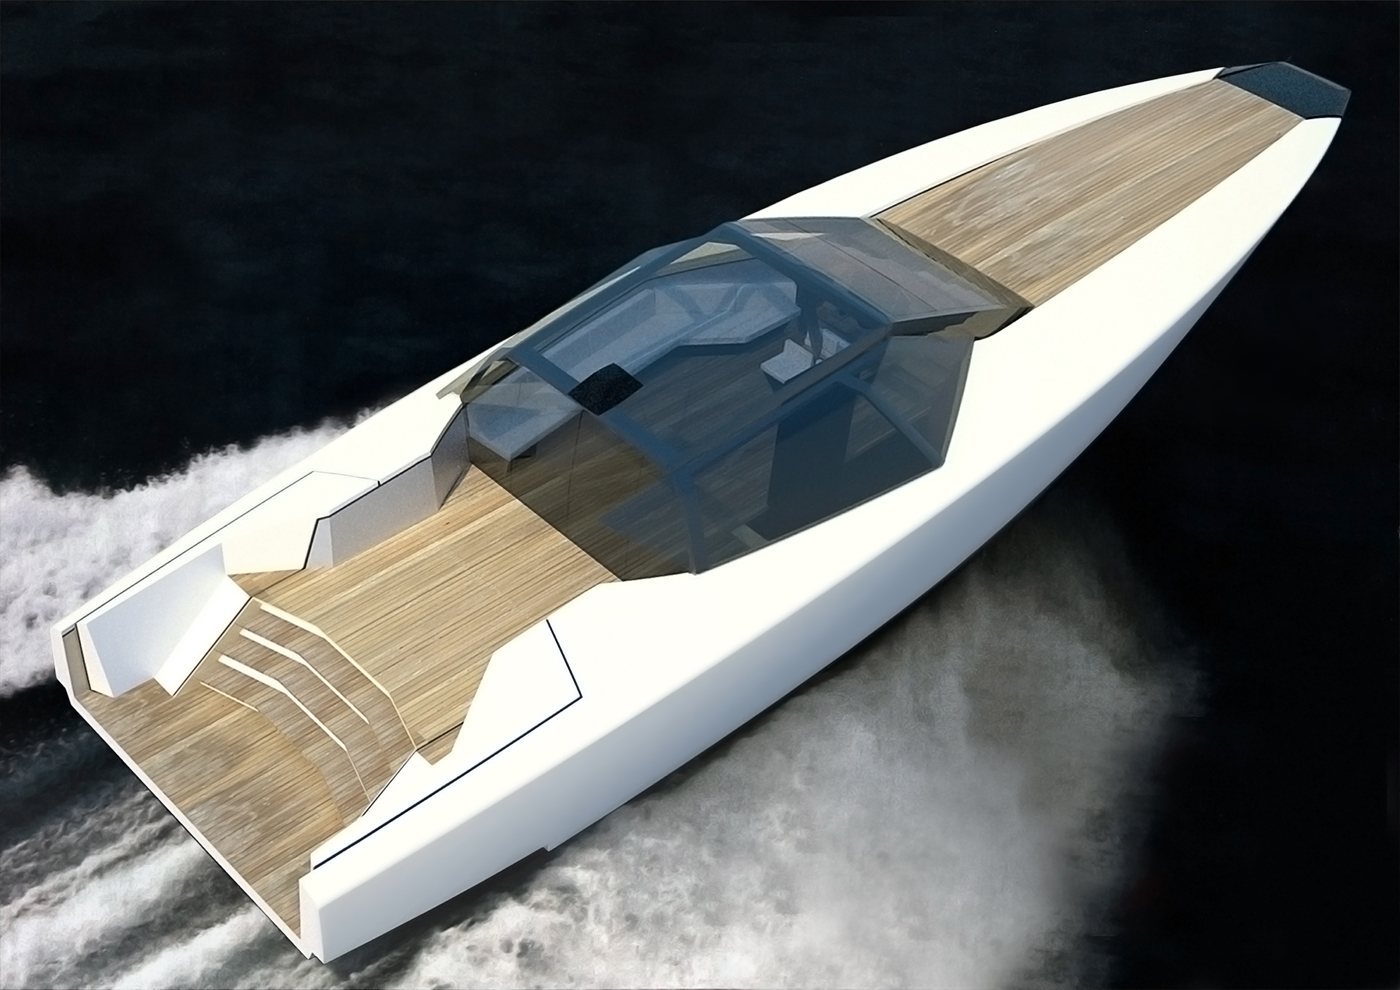 Yacht design - 90 Feet - Power boat - Final exterior3 - Davide Mezzasalma - Furniture design - Berlin